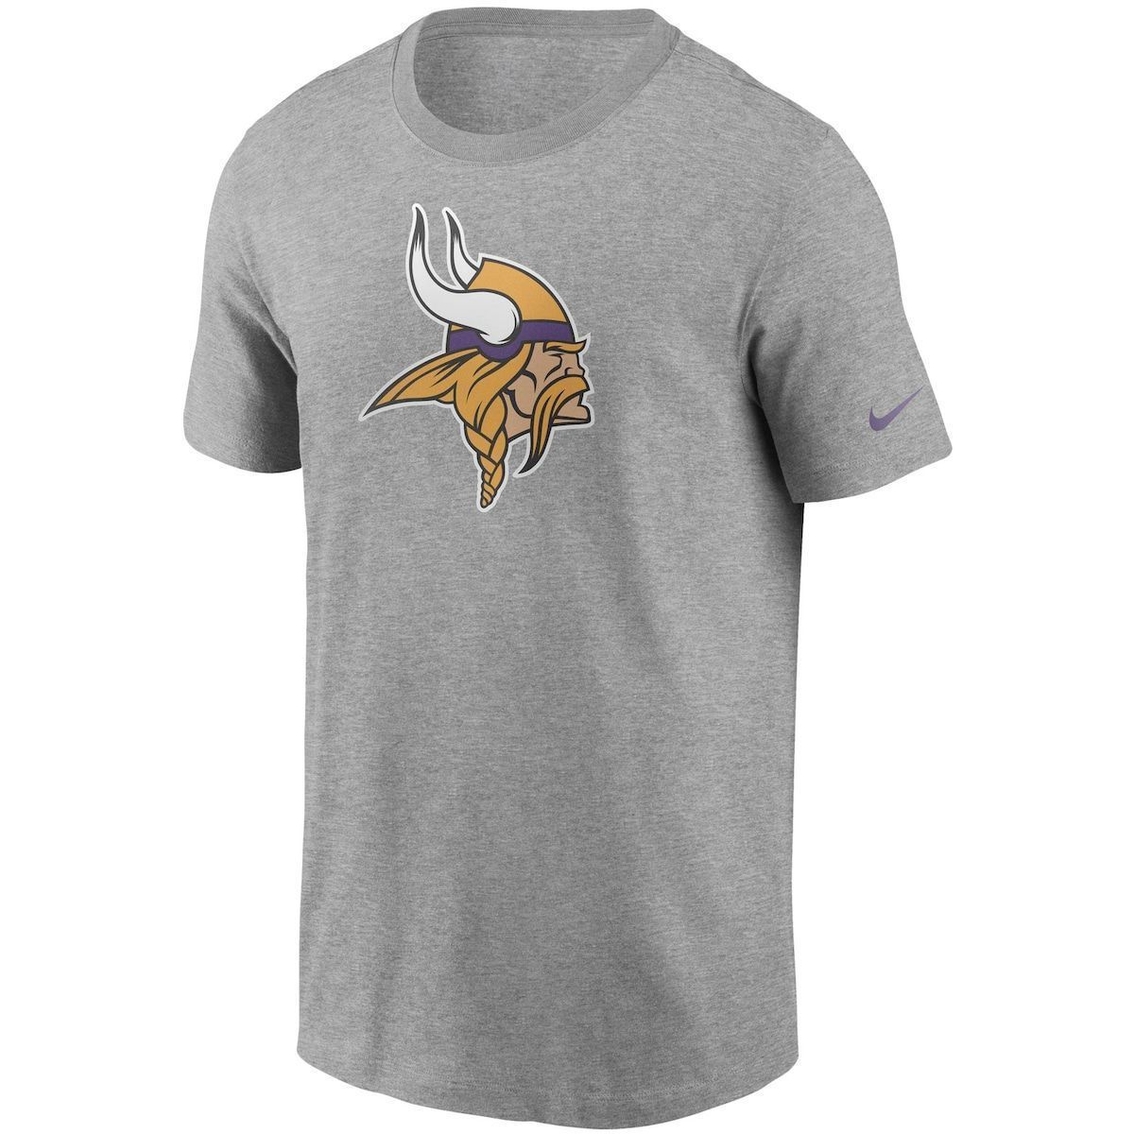 Men's Nike Heathered Gray Minnesota Vikings Primary Logo T-Shirt - Image 3 of 4